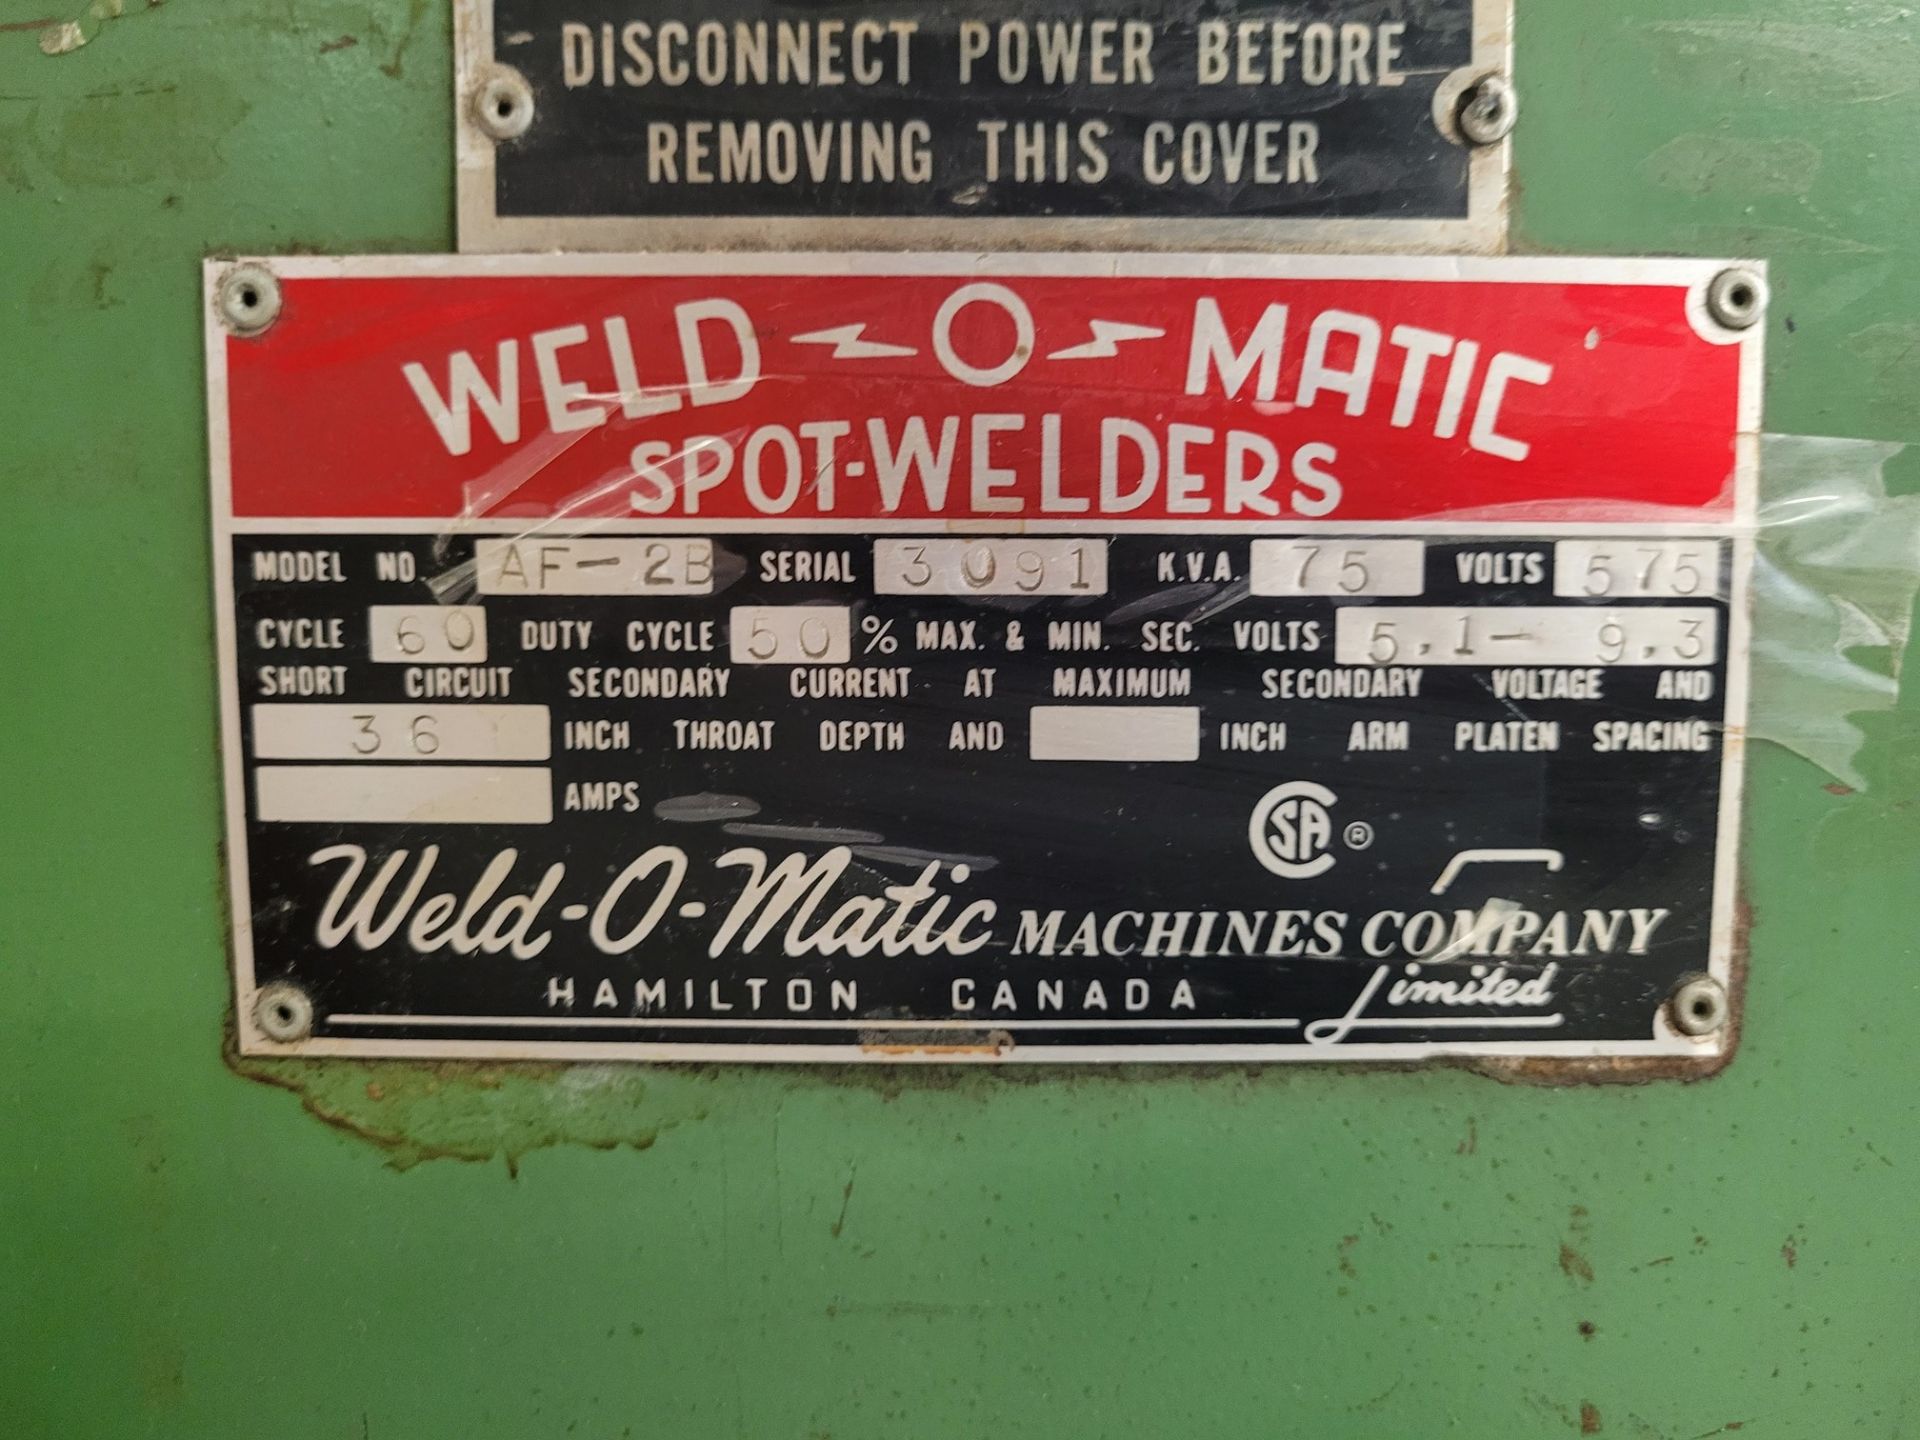 WELD-O-MATIC AF-2B SPOT WELDER, 75 KVA, 36" THROAT, MEDWELD CONTROL, S/N 3091 (RIGGING FEE $150) - Image 3 of 3